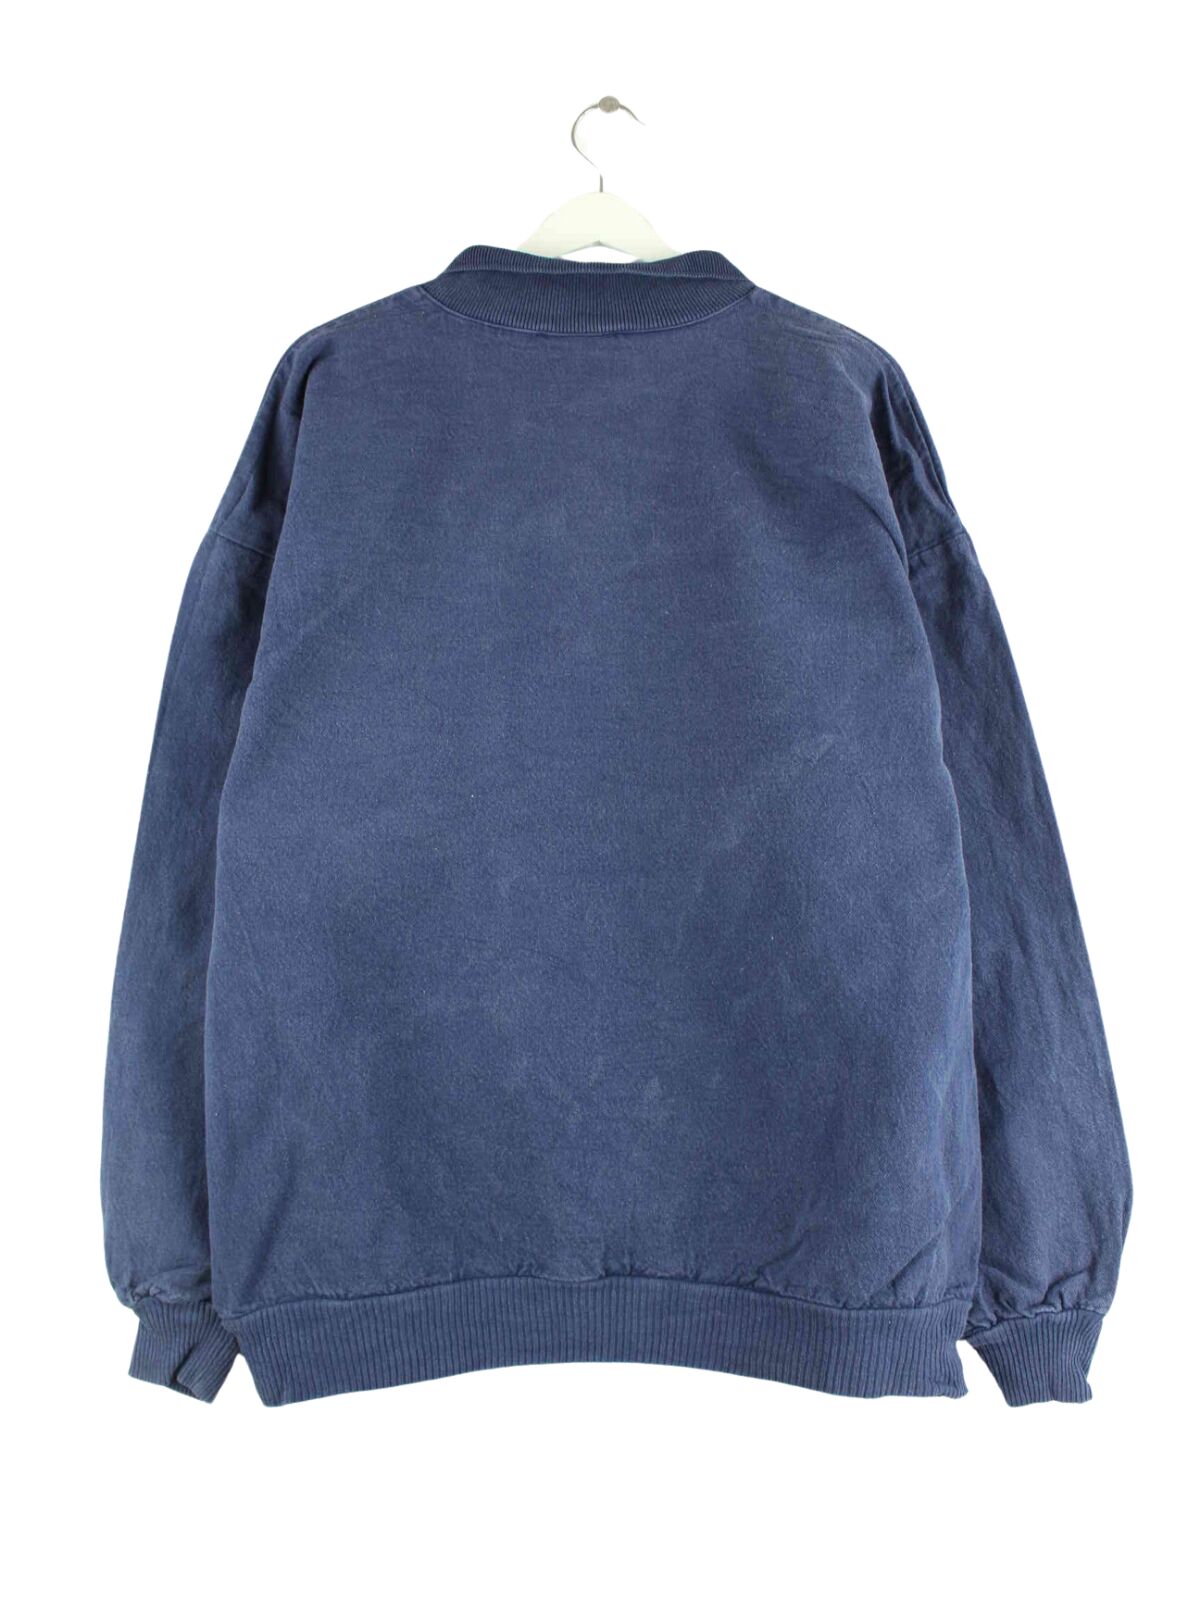 Vintage 80s Sweater Blau XL (back image)